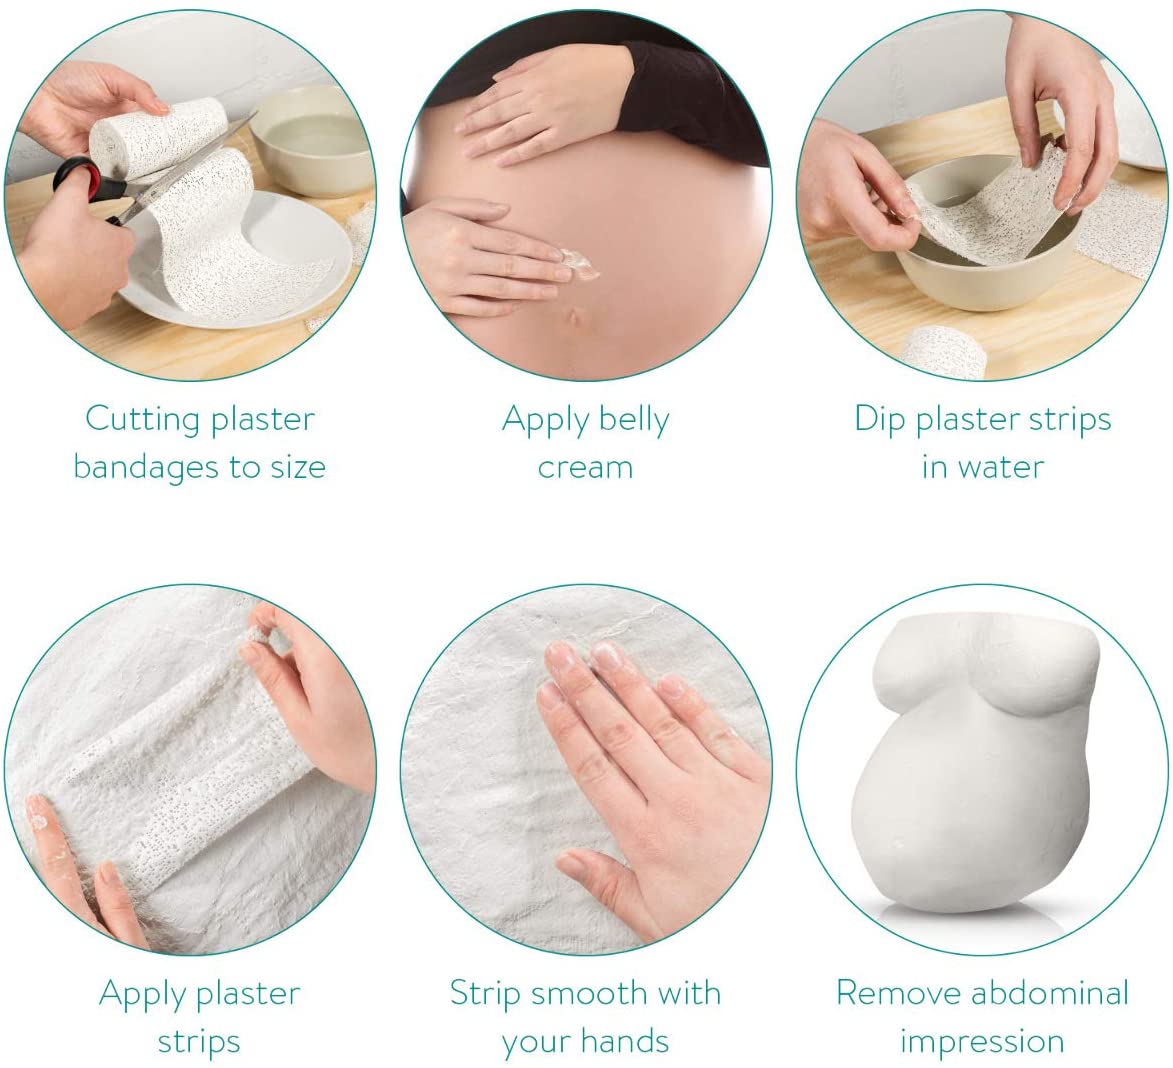 OrthoTape Plaster Bandage |Yeso plaster gauze wrap|3 INCH X 5 YRD|-12 ROLL